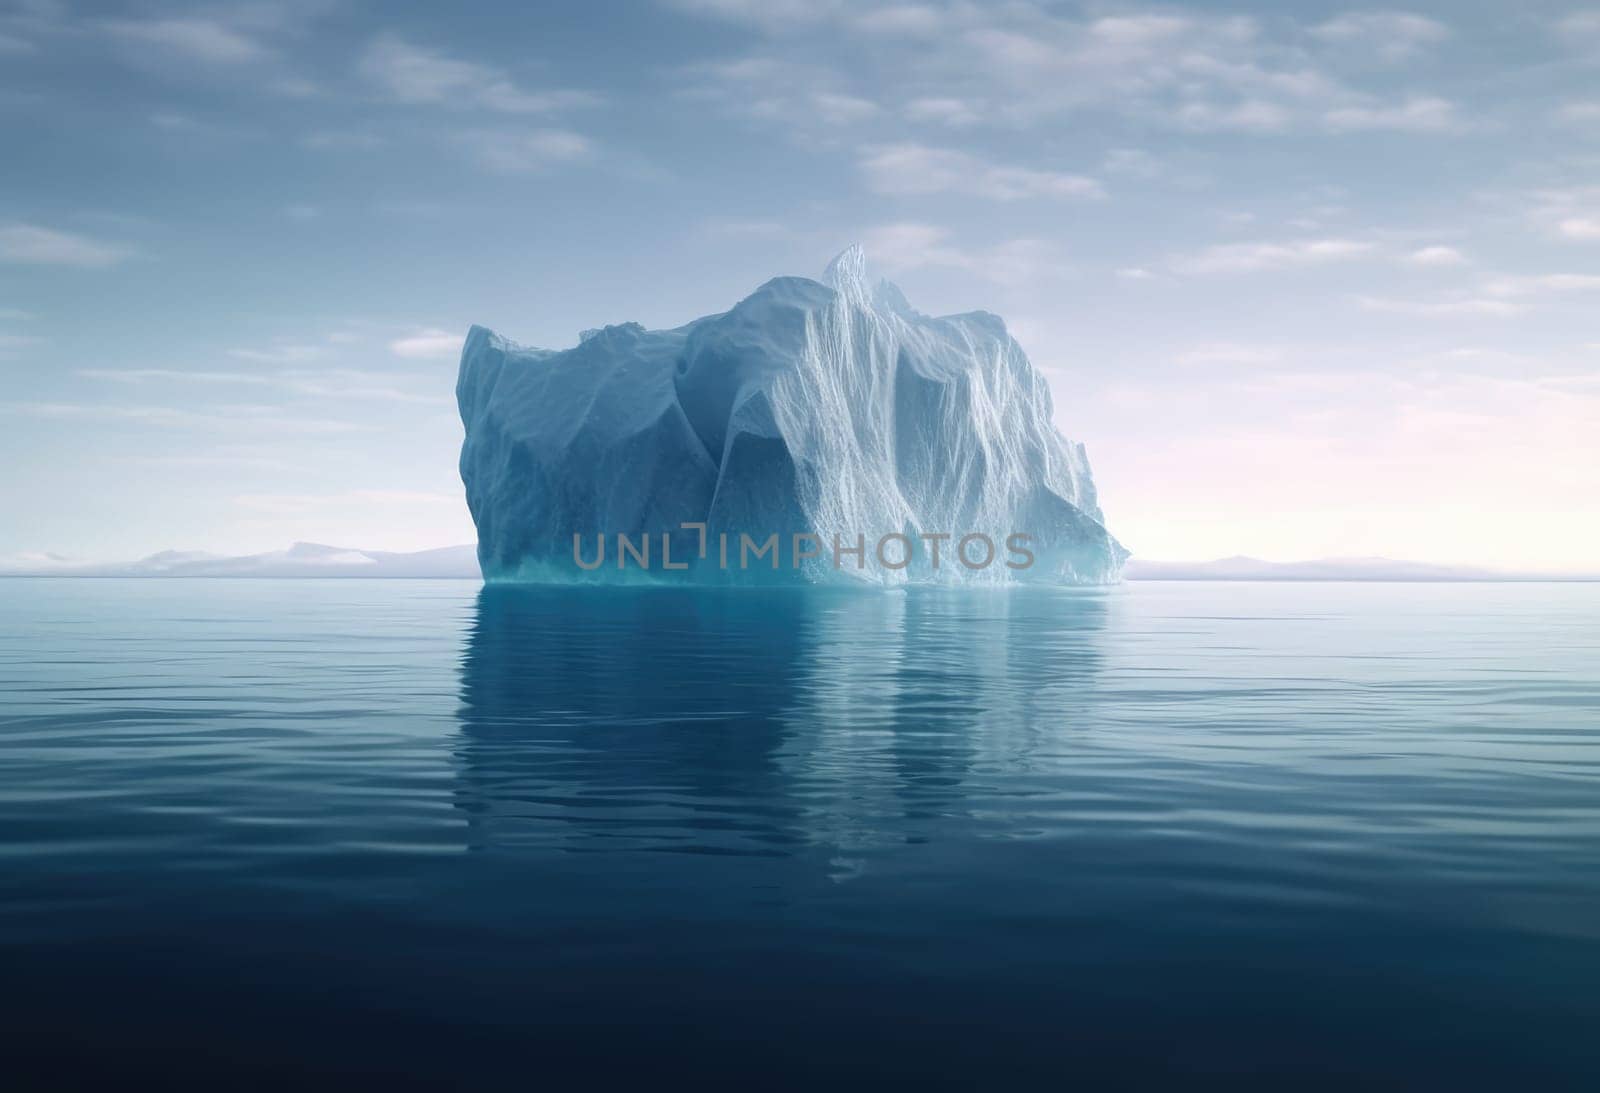 A large iceberg in the sea. Dramatic scene